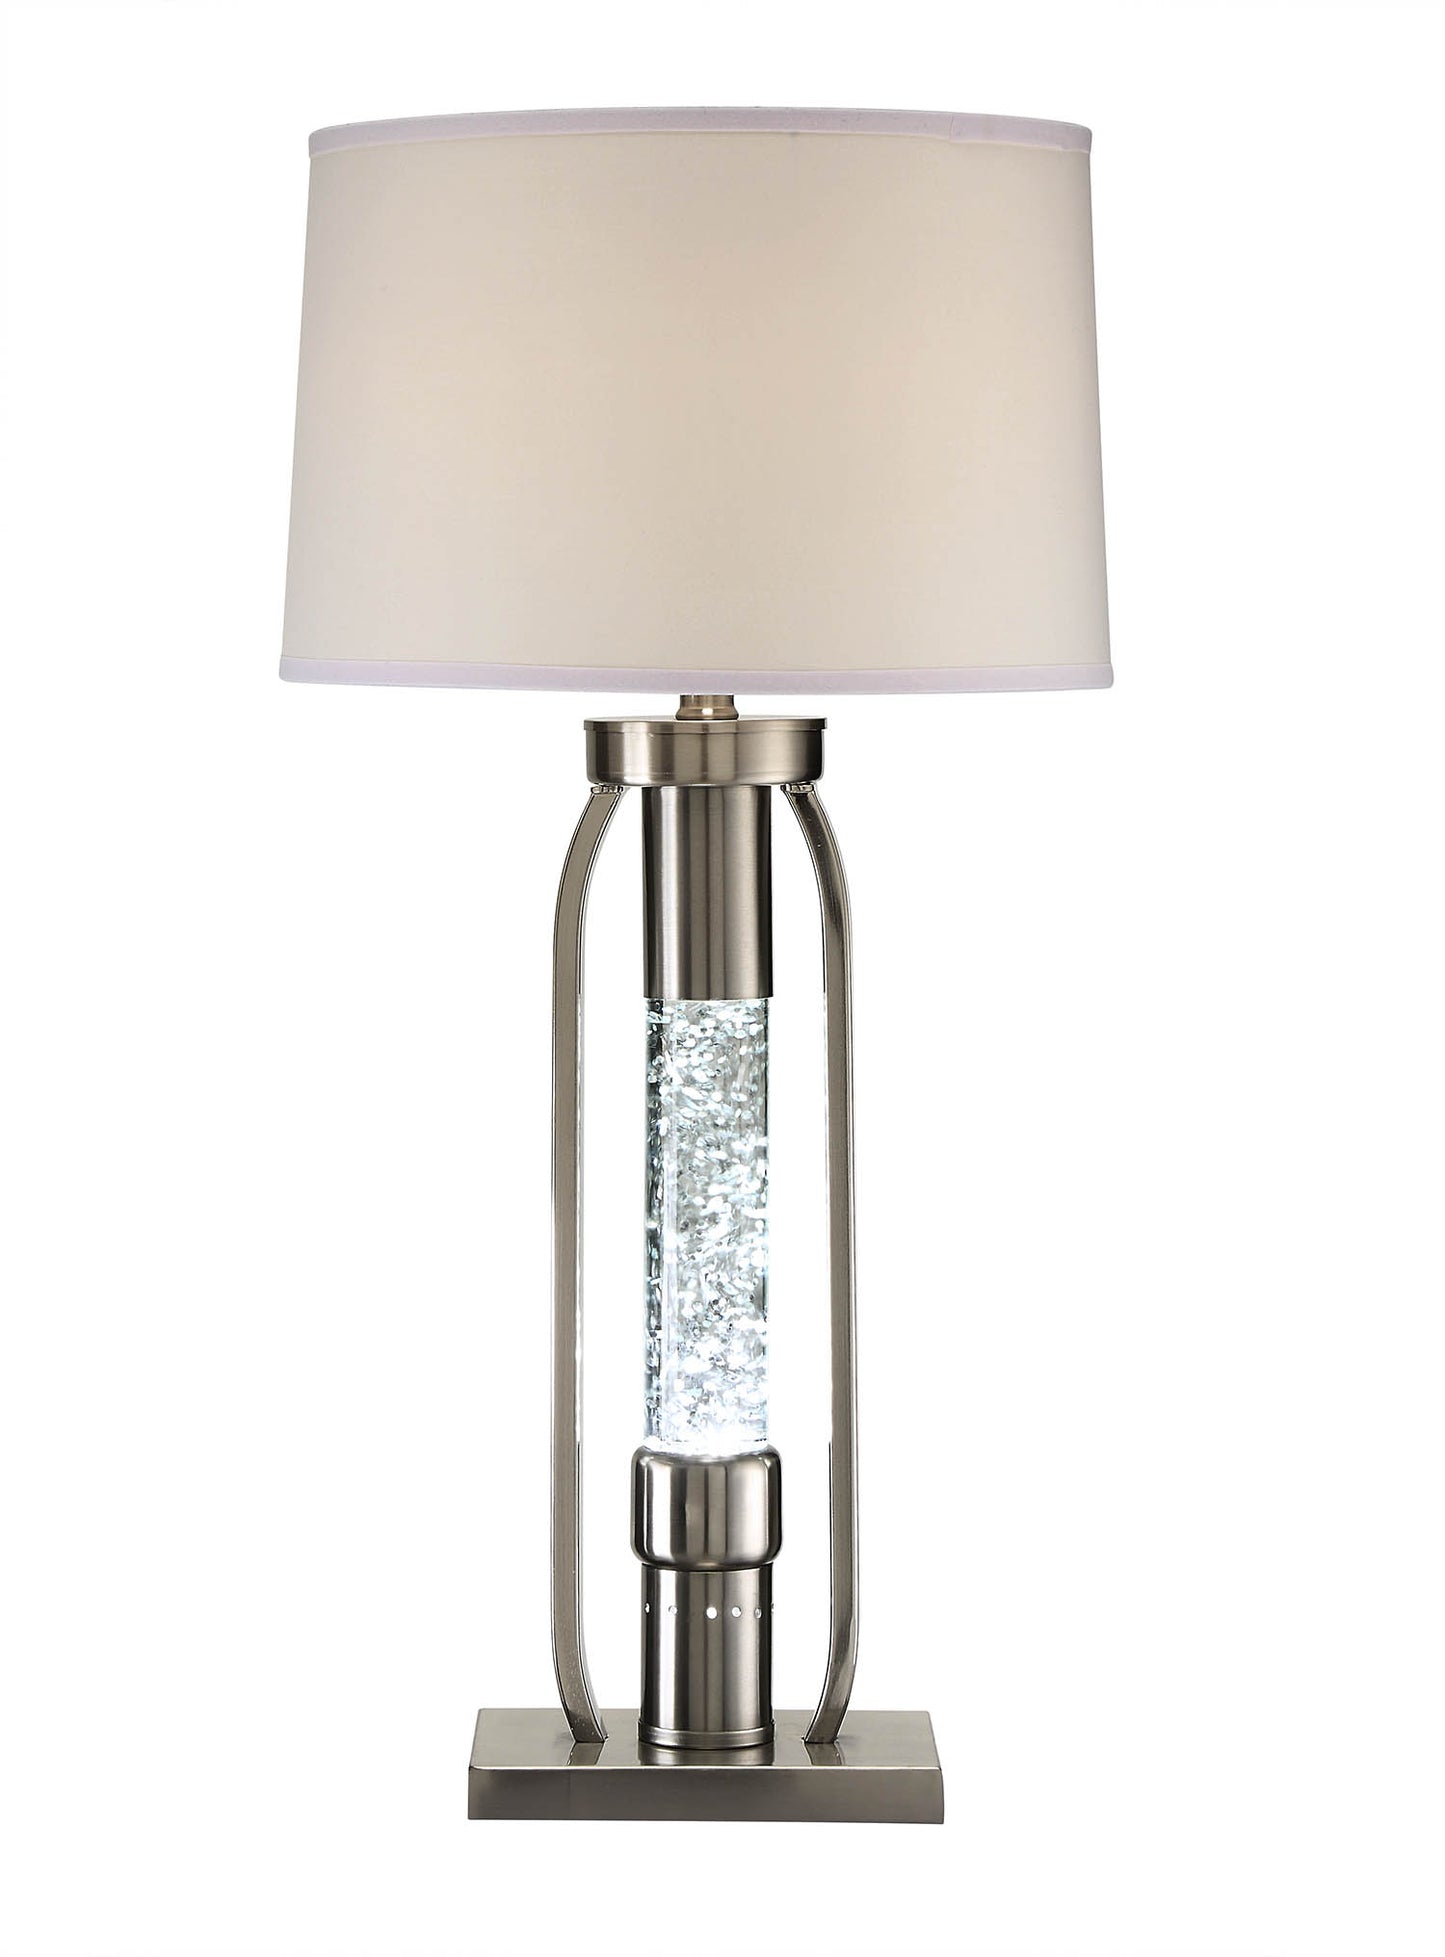 15" X 15" X 31" Sand Nickel Table Lamp